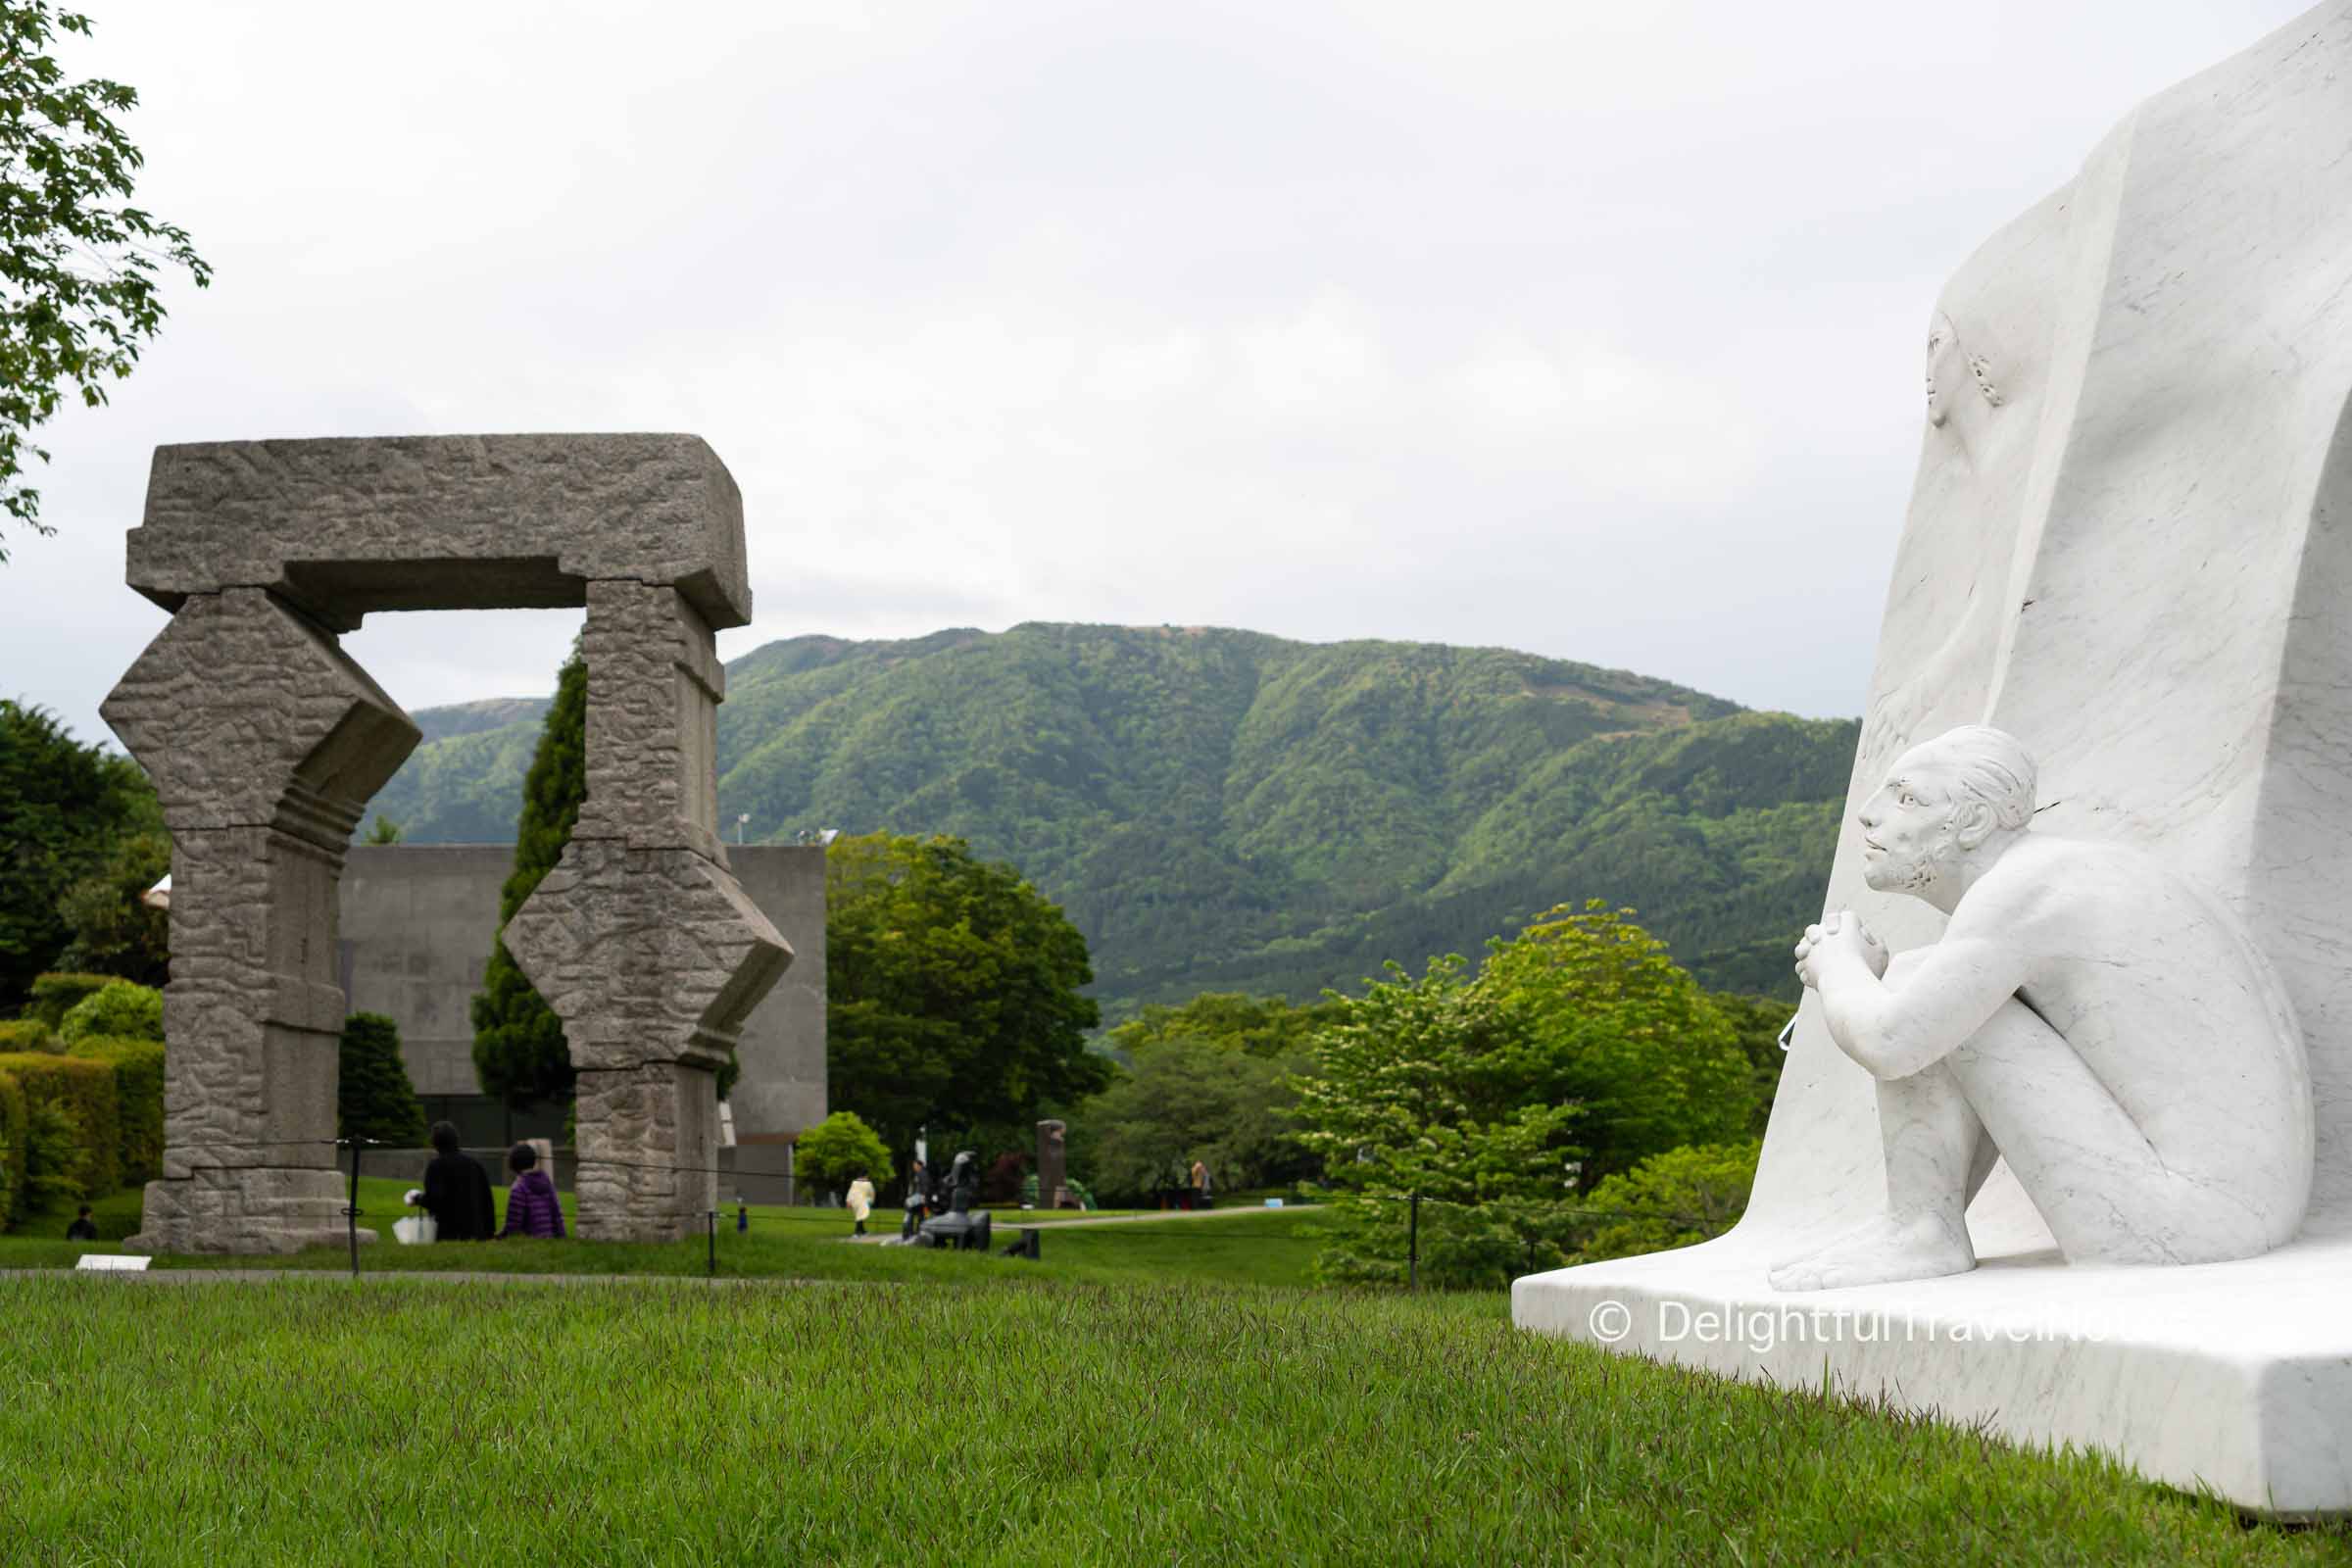 Outdoor sculptures at Hakone Open Air Museum.